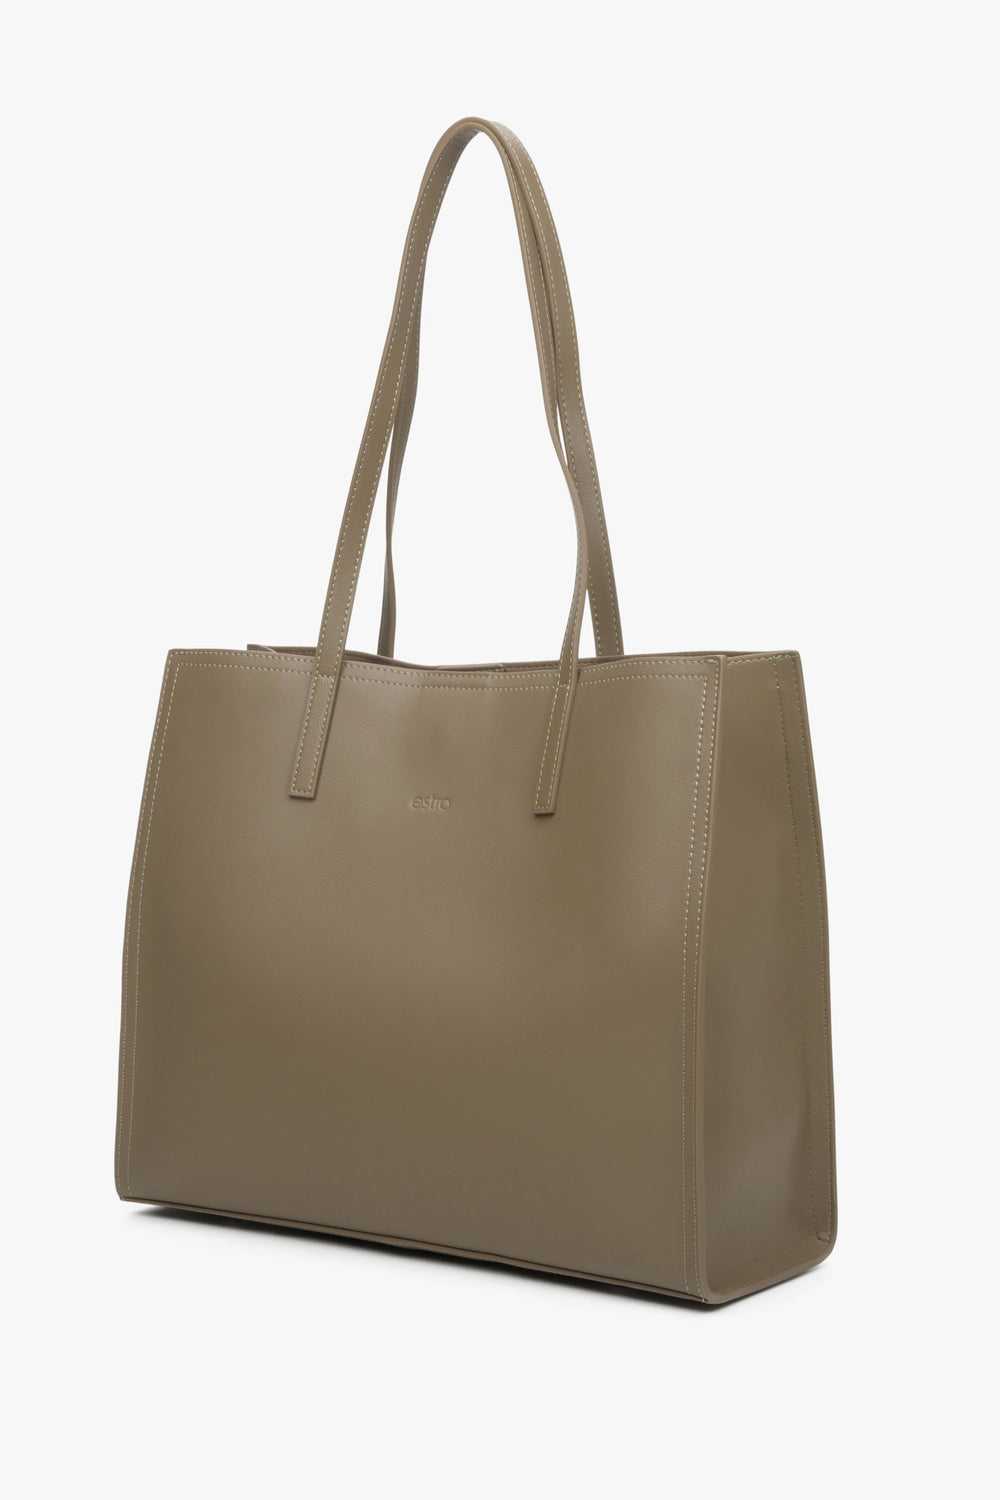 Brown leather women's shopper bag.